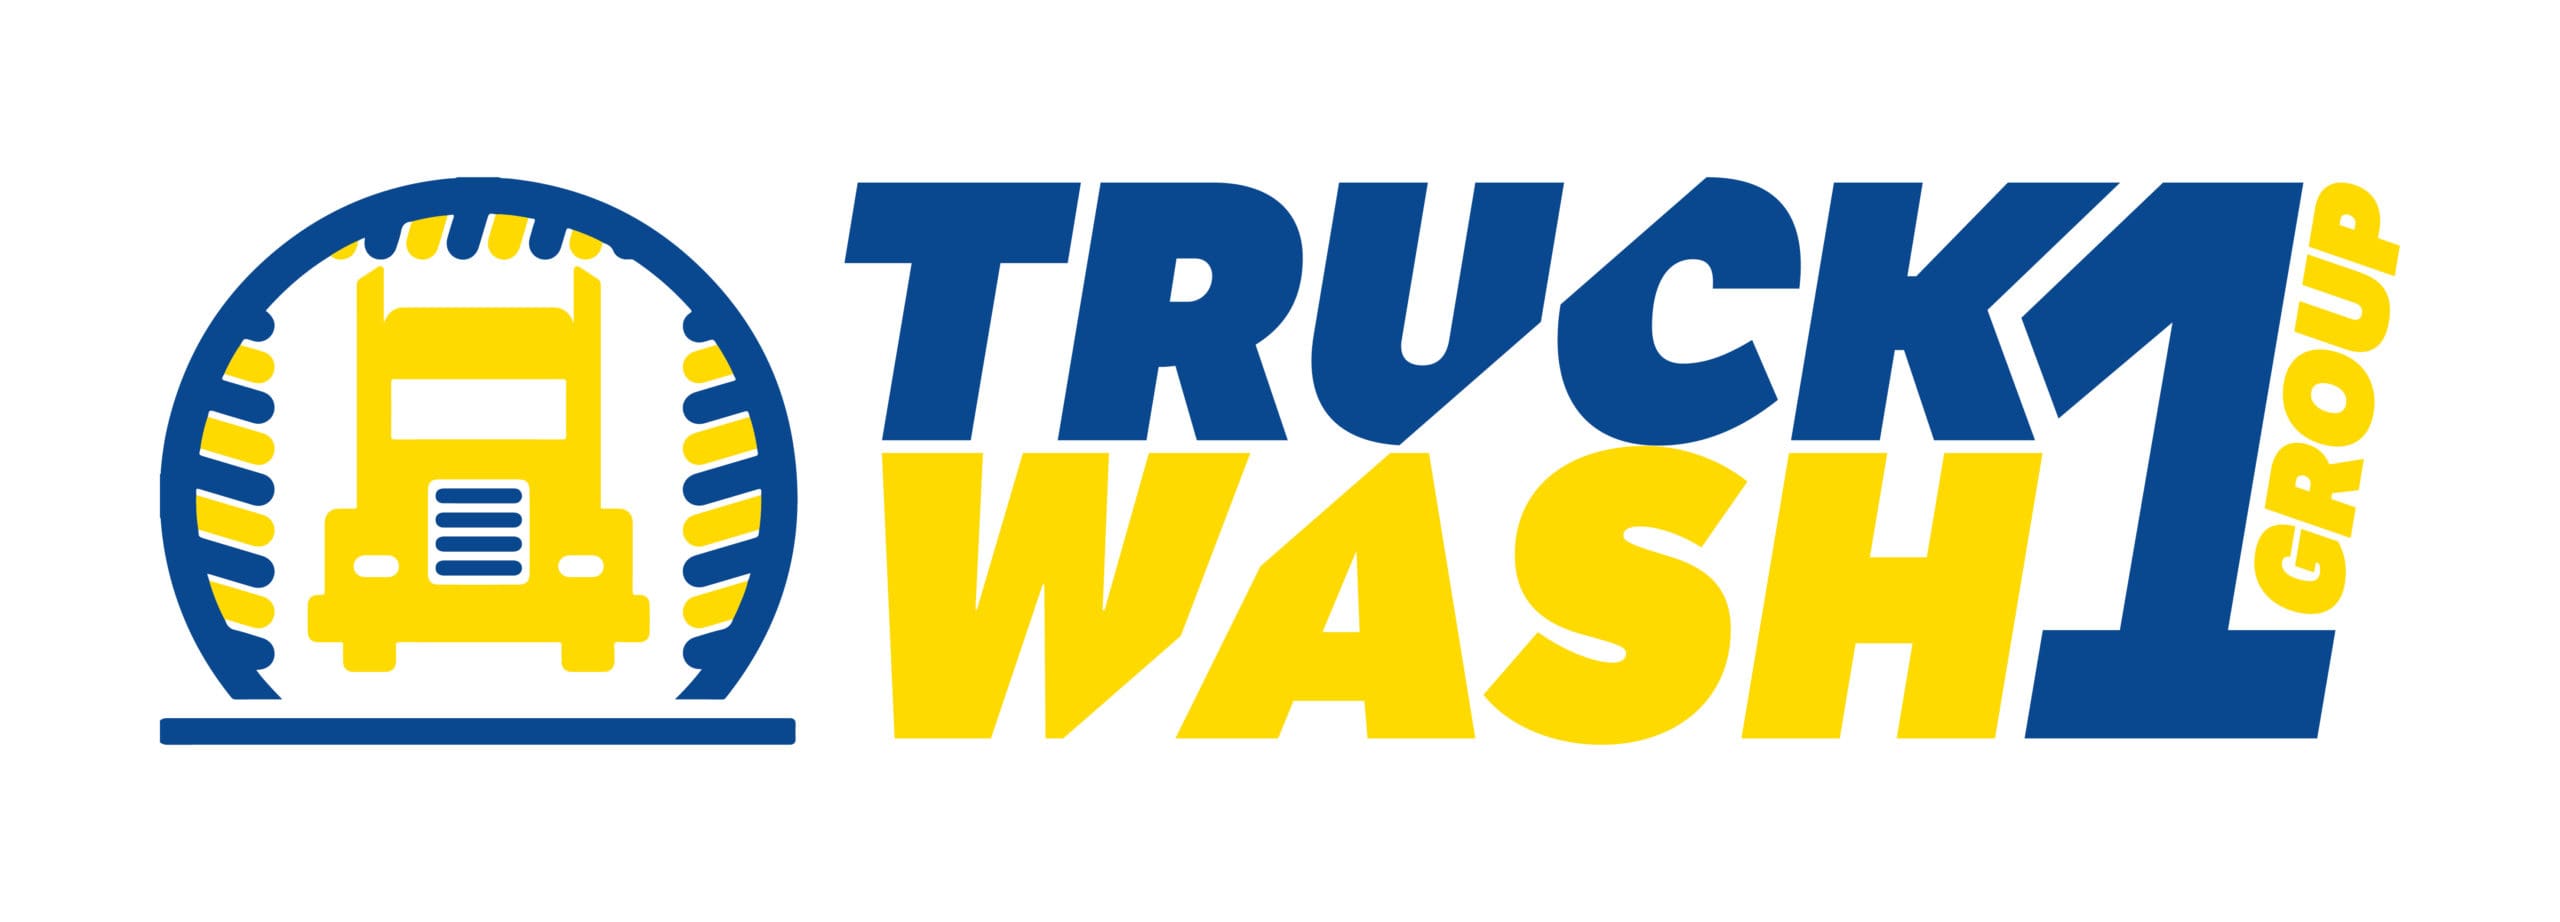 Truckwash1group – Muts